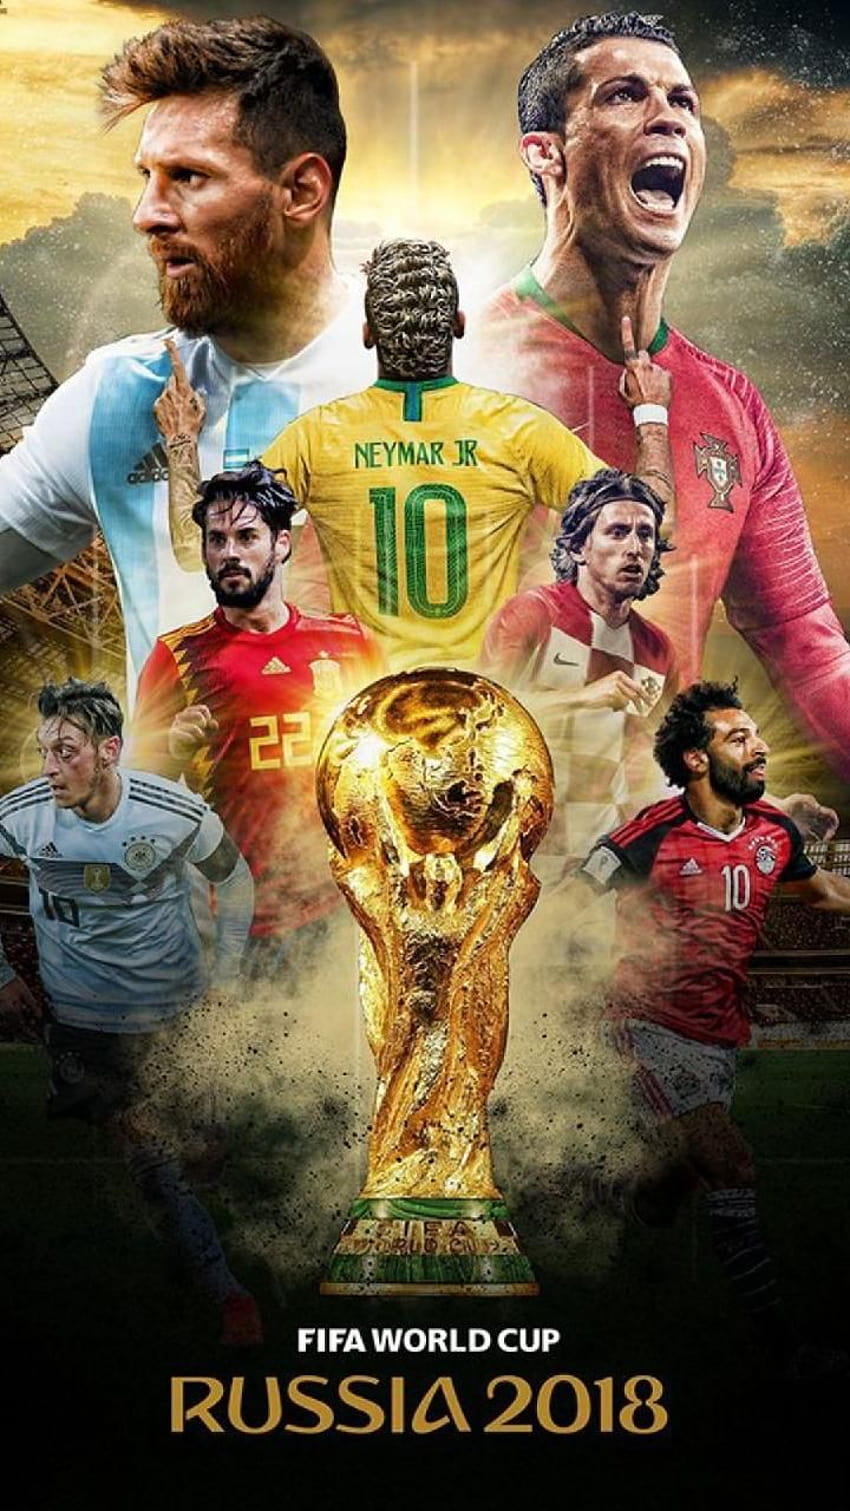 FIFA World Cup 2022 Winner Argentina Team Wallpaper 4K HD PC 9620h